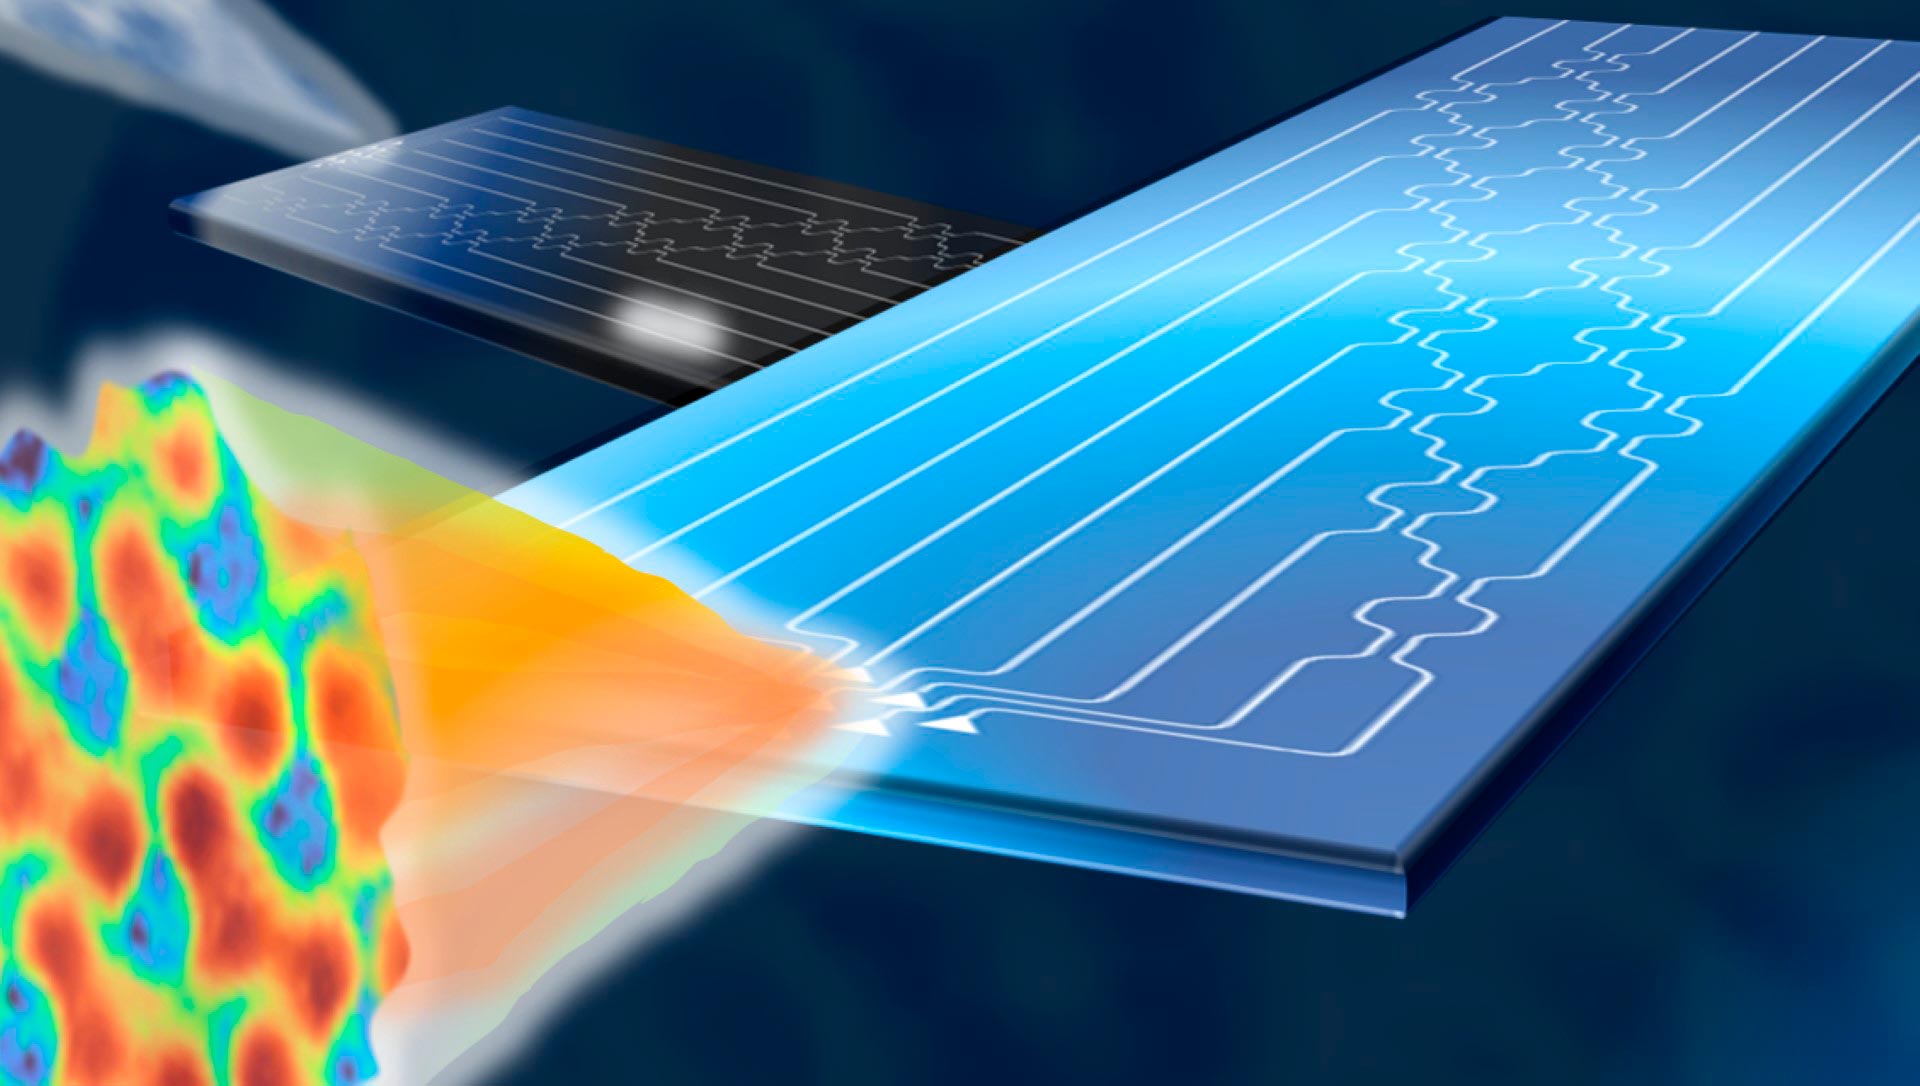 Revolutionizing Wireless Communication with Innovative Photonic Chips